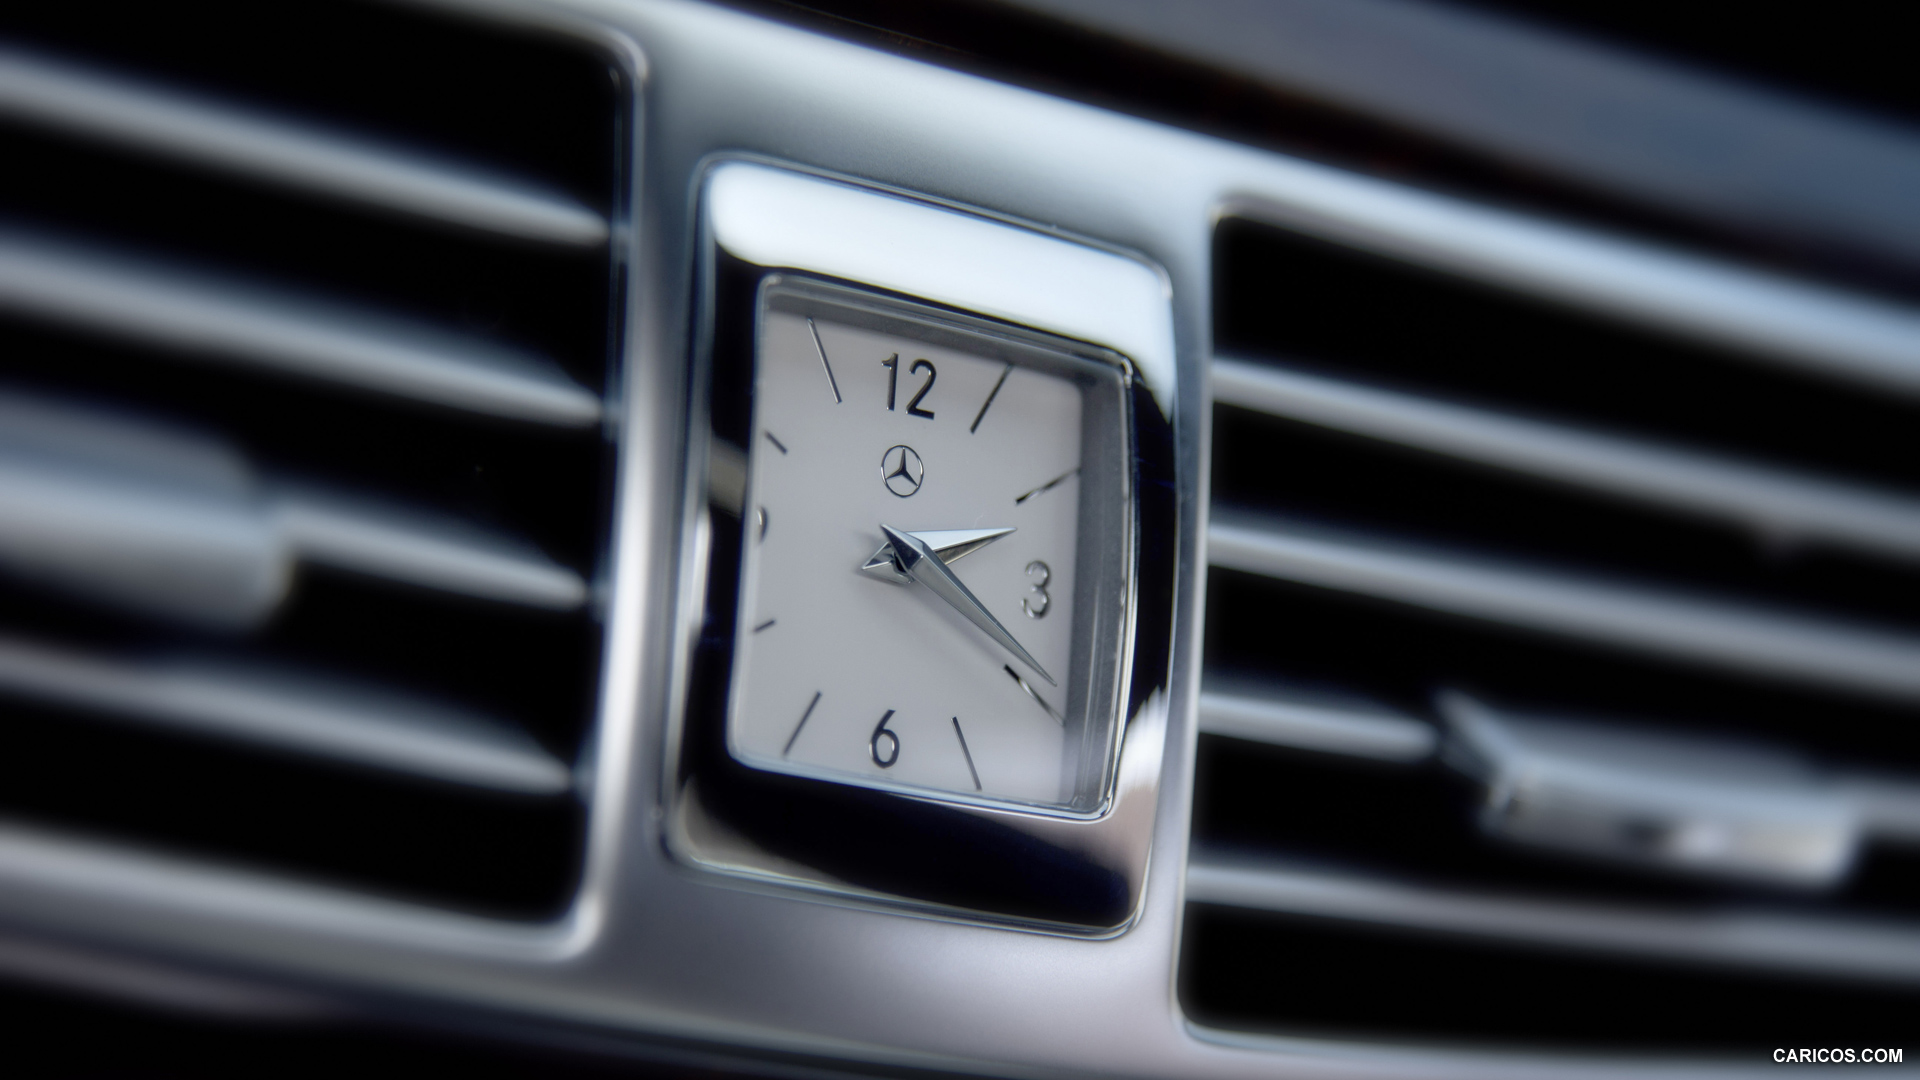 2013 Mercedes-Benz CLS 500 4MATIC Shooting Brake Clock - Interior Detail, #182 of 184